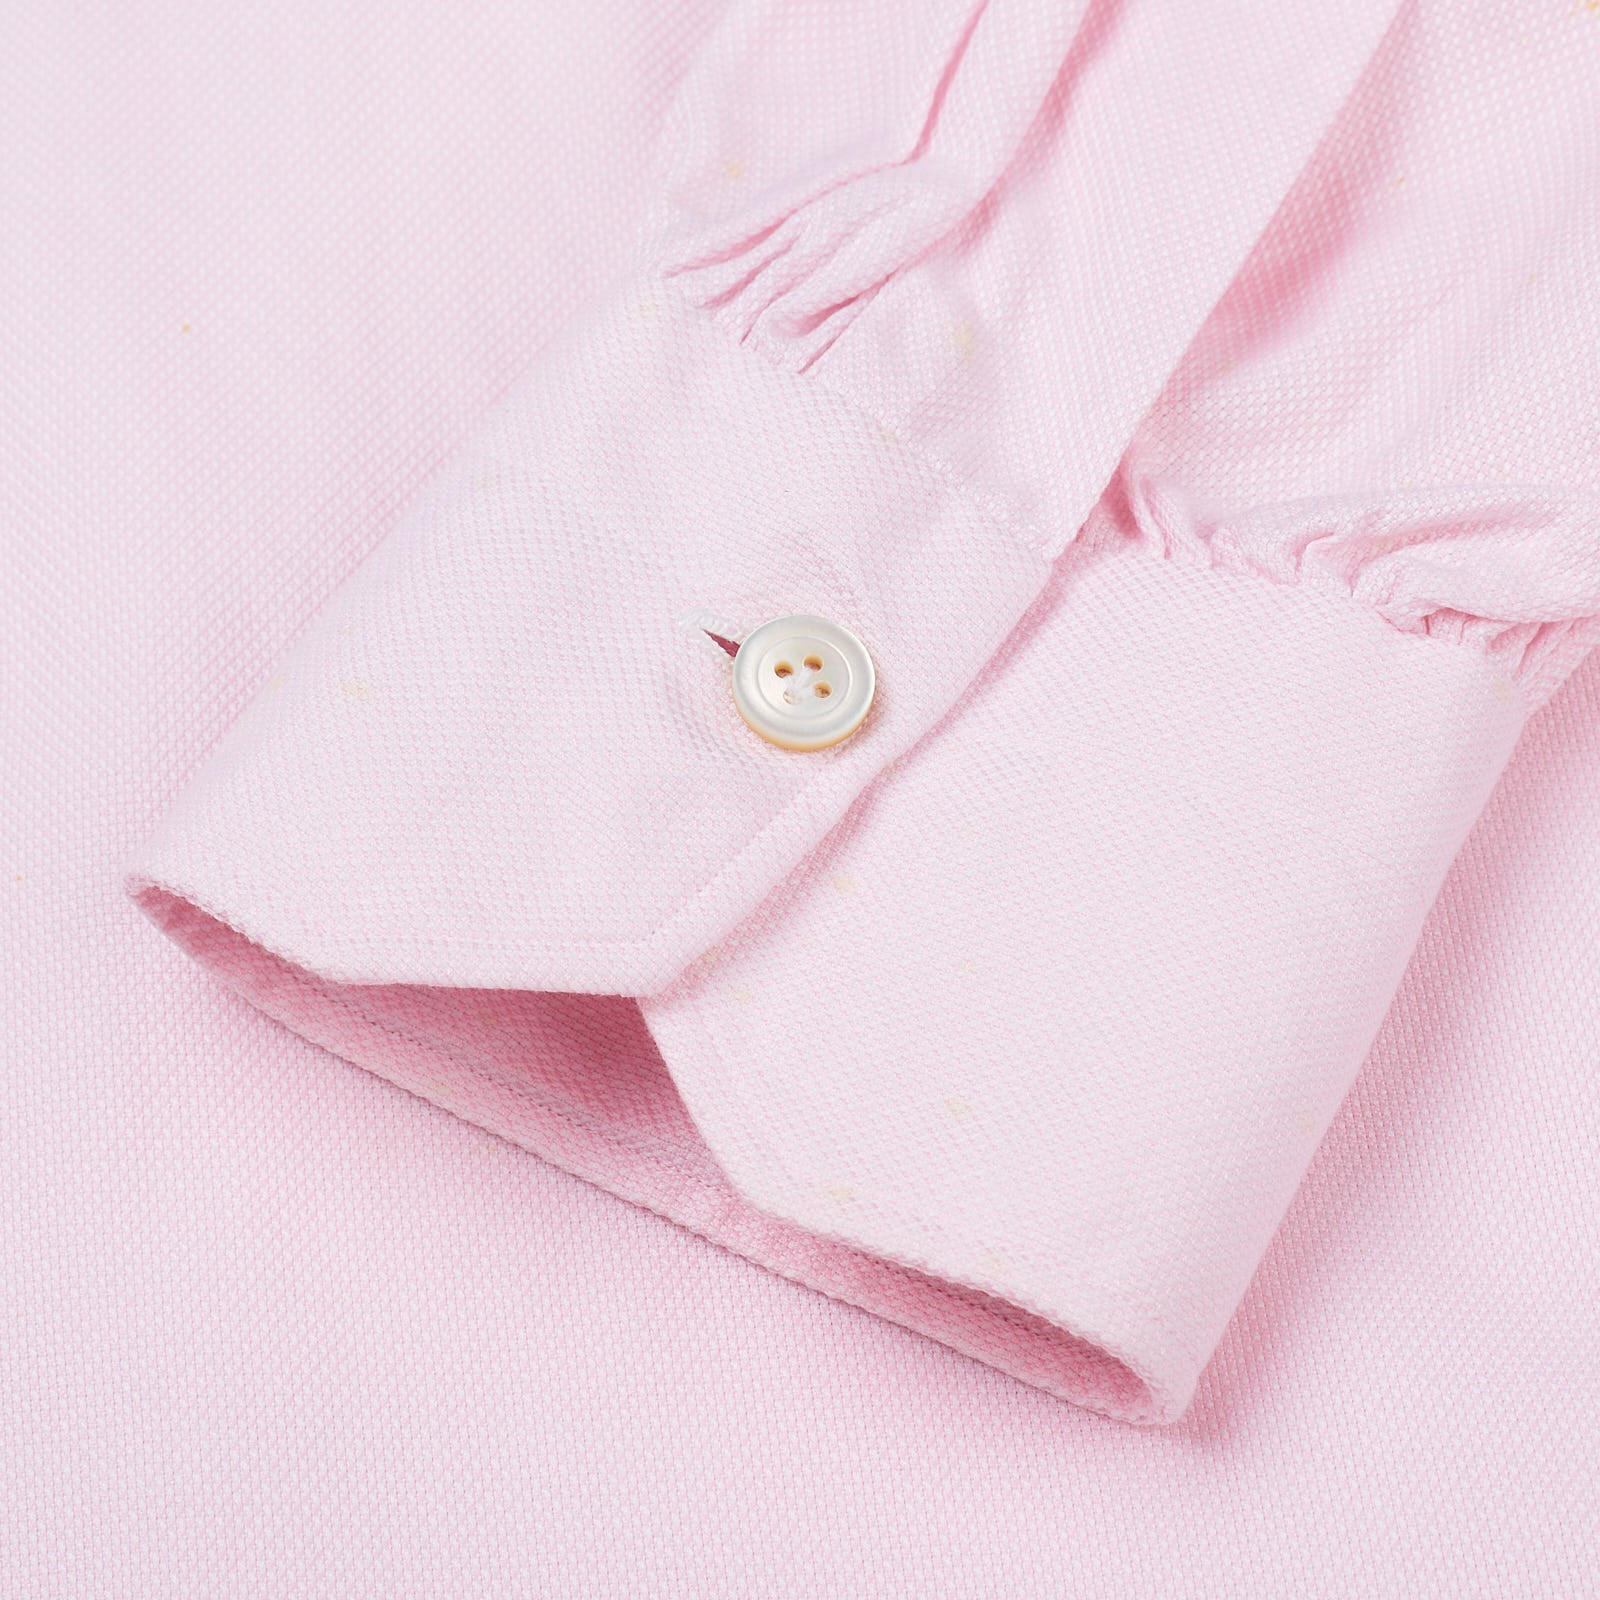 KITON Napoli Handmade Bespoke Pink Oxford Cotton Button-Down Shirt EU 39 US 15.5 KITON